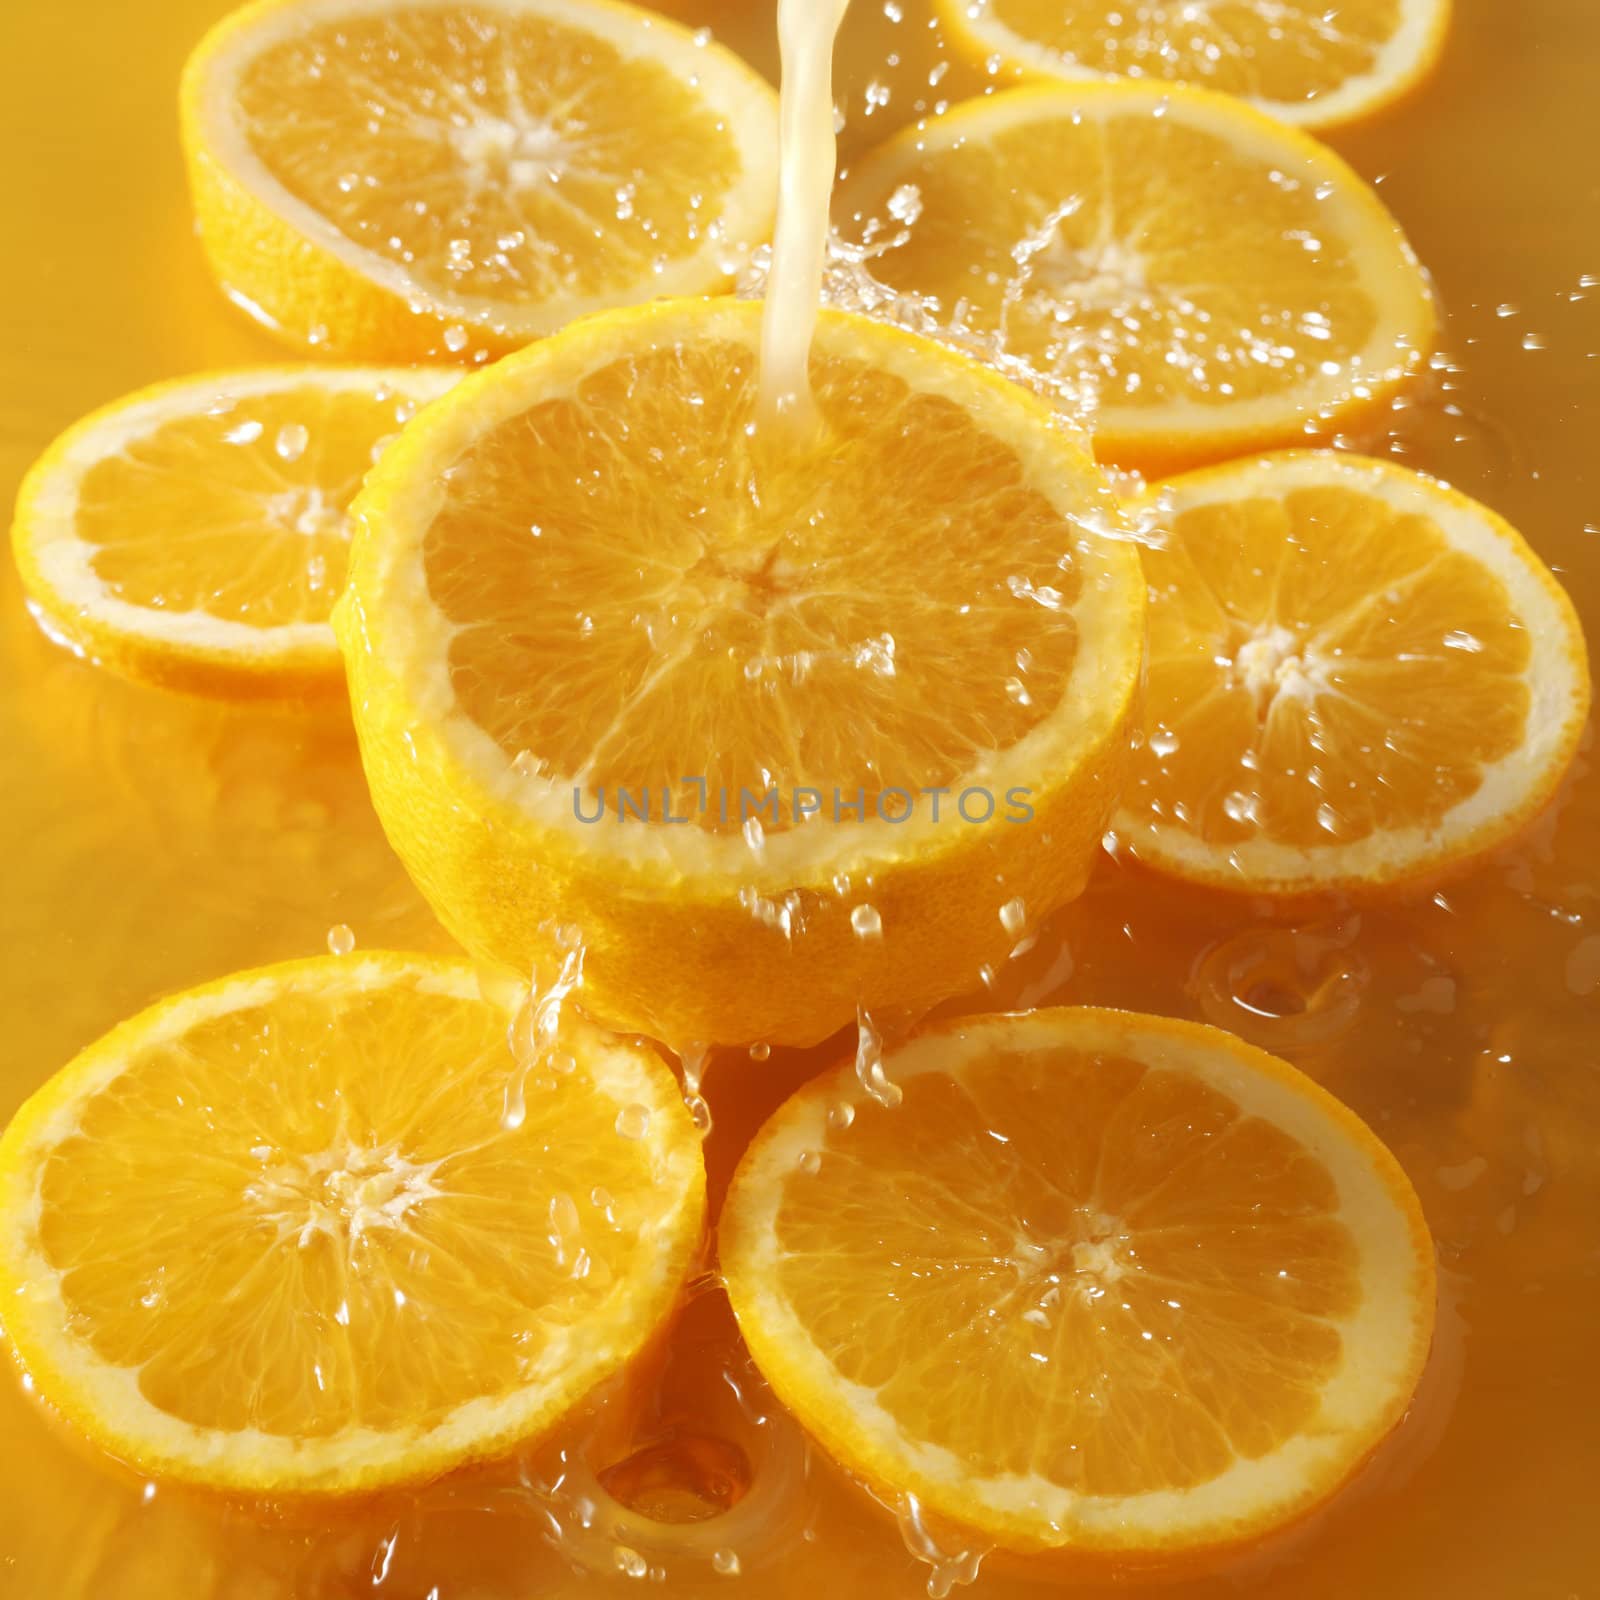 stock imageof the orange juice